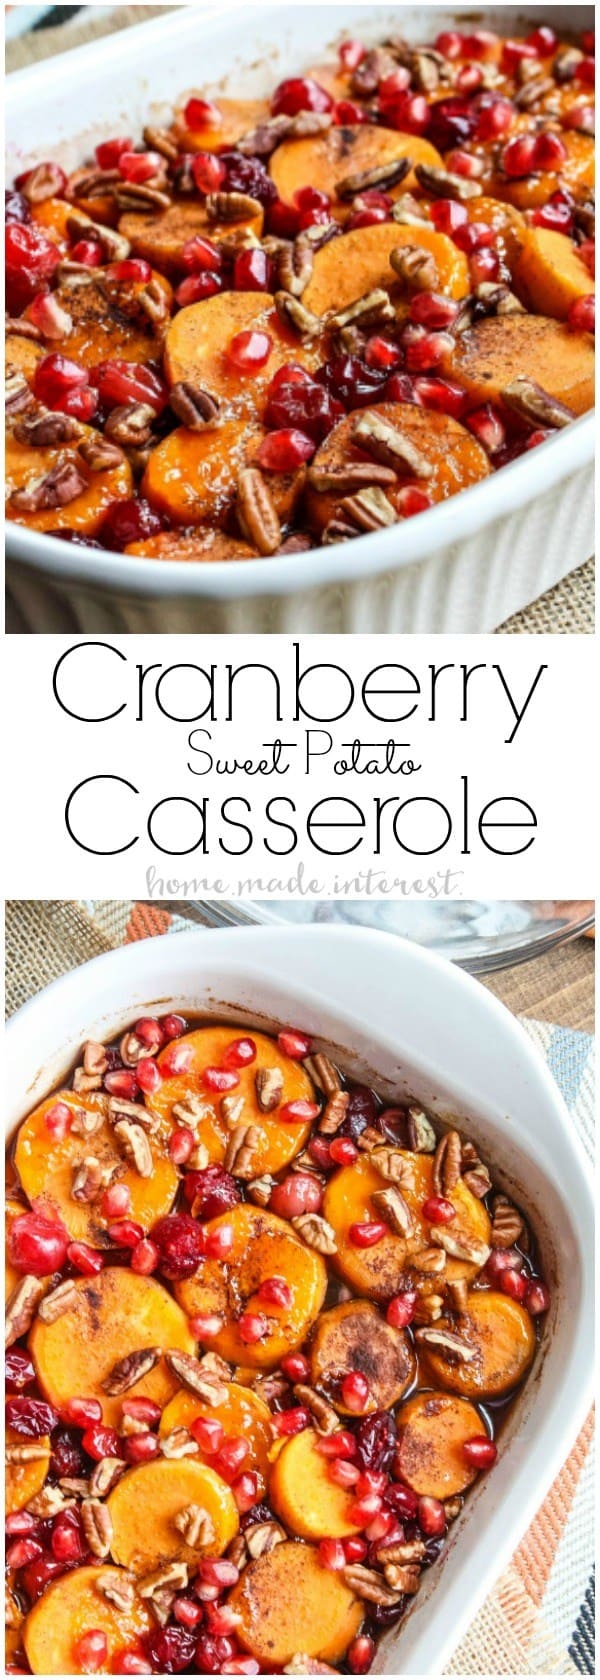 Cranberry sweet potato casserole